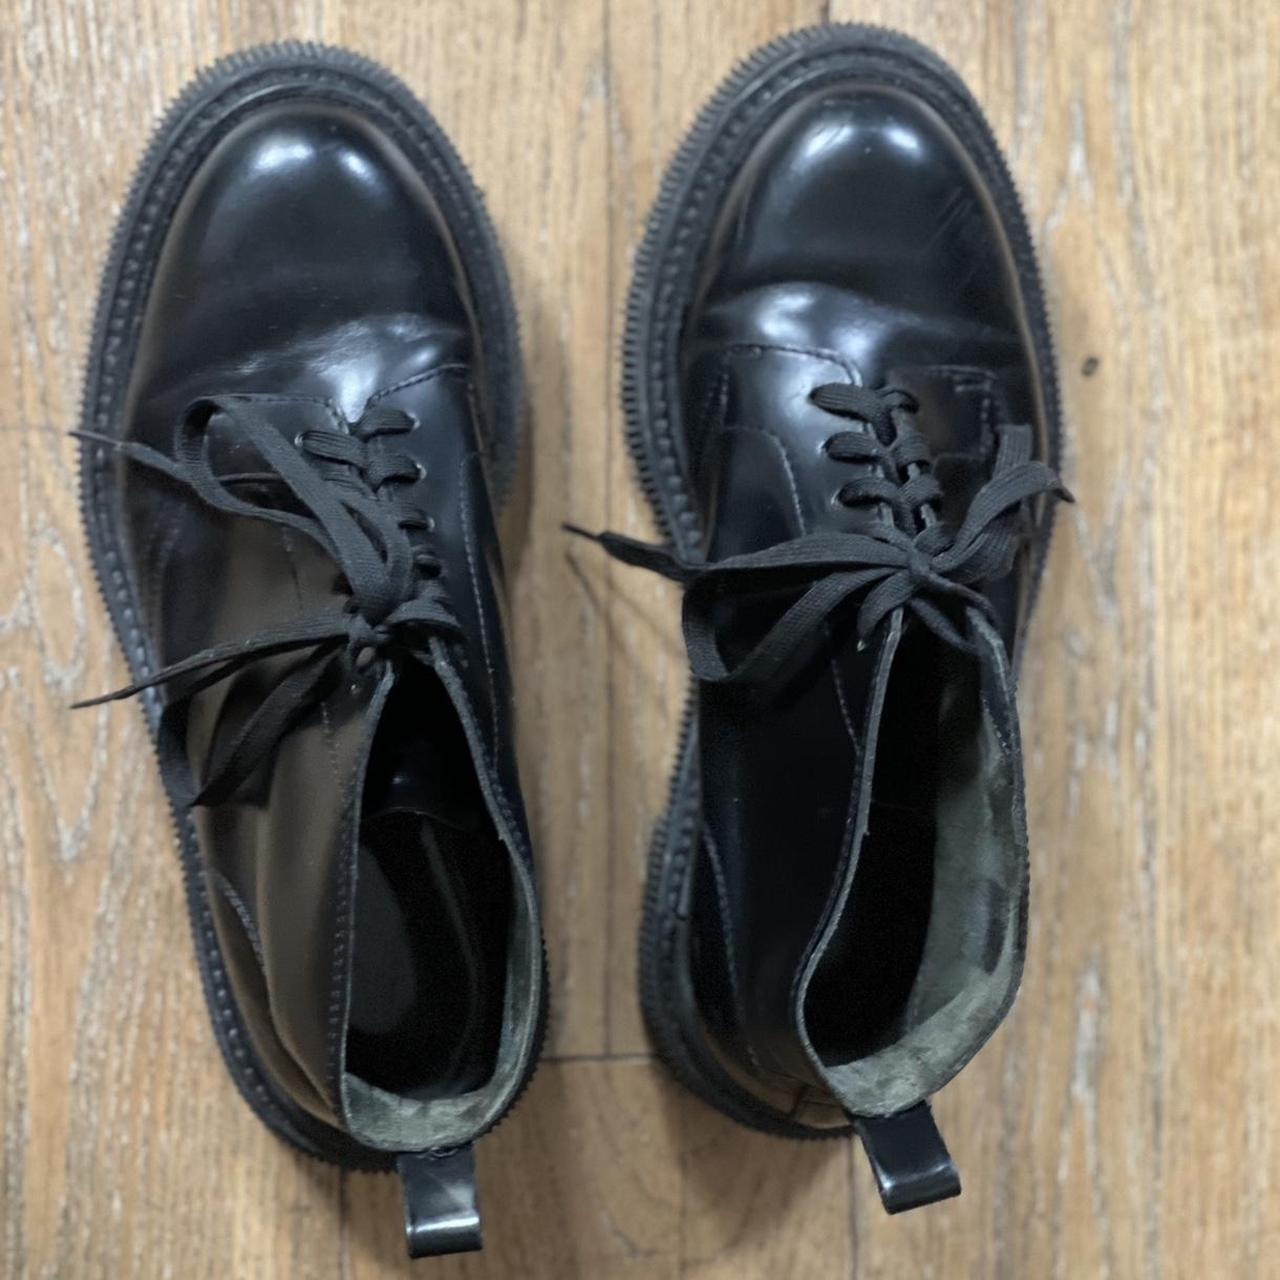 Adieu Women's Black Boots (4)